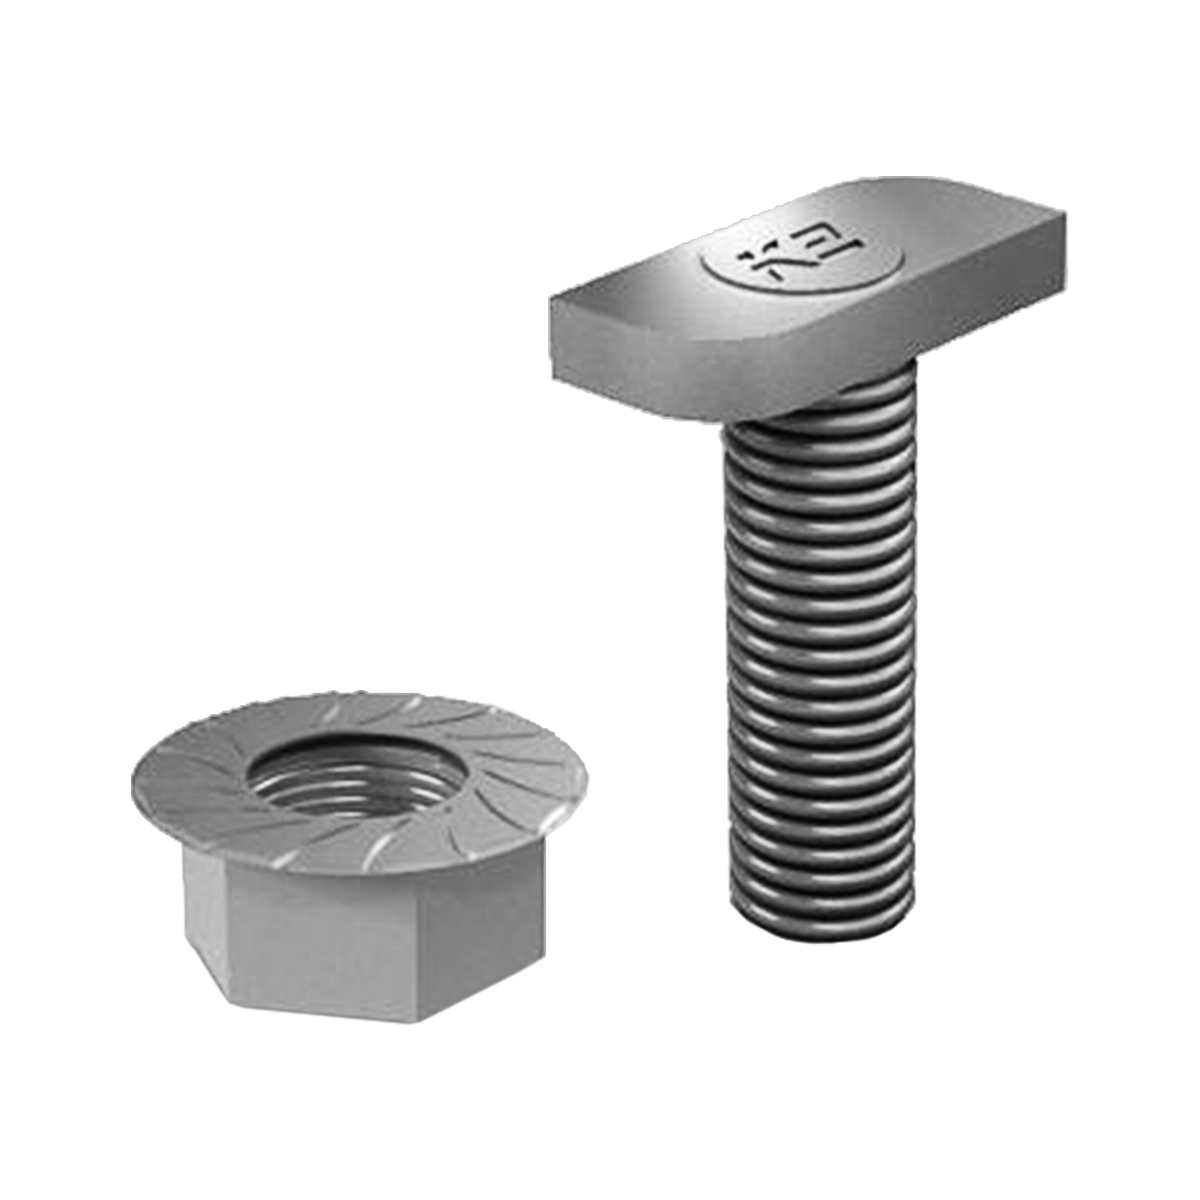 K2 cap screw + nut